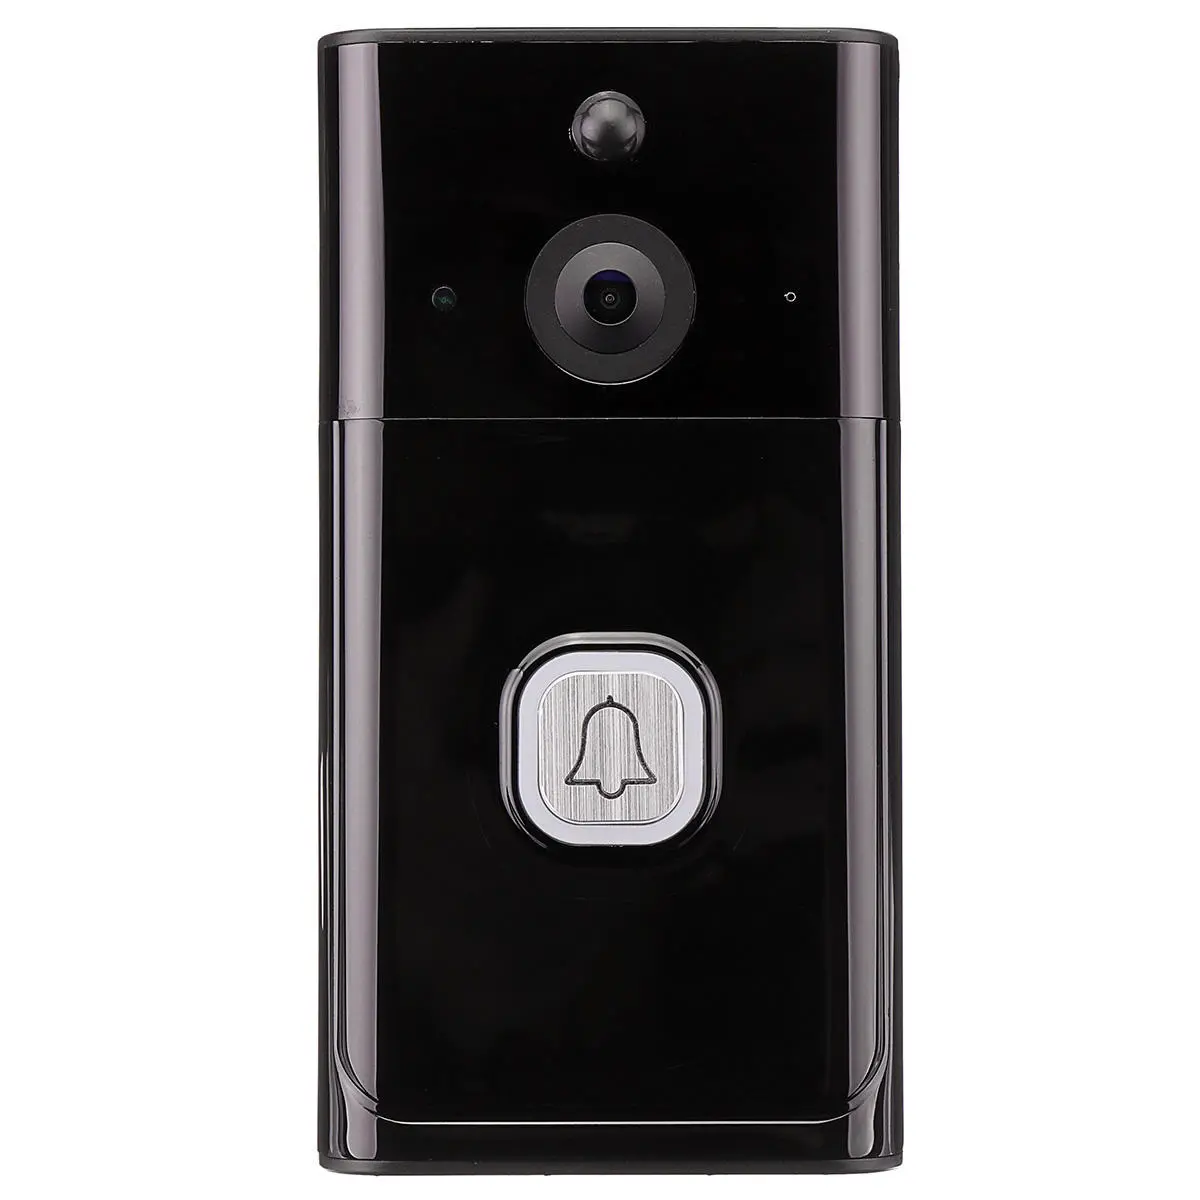 Wireless wifi video doorbell rainproof smartphone remote video camera security two way talk 166°